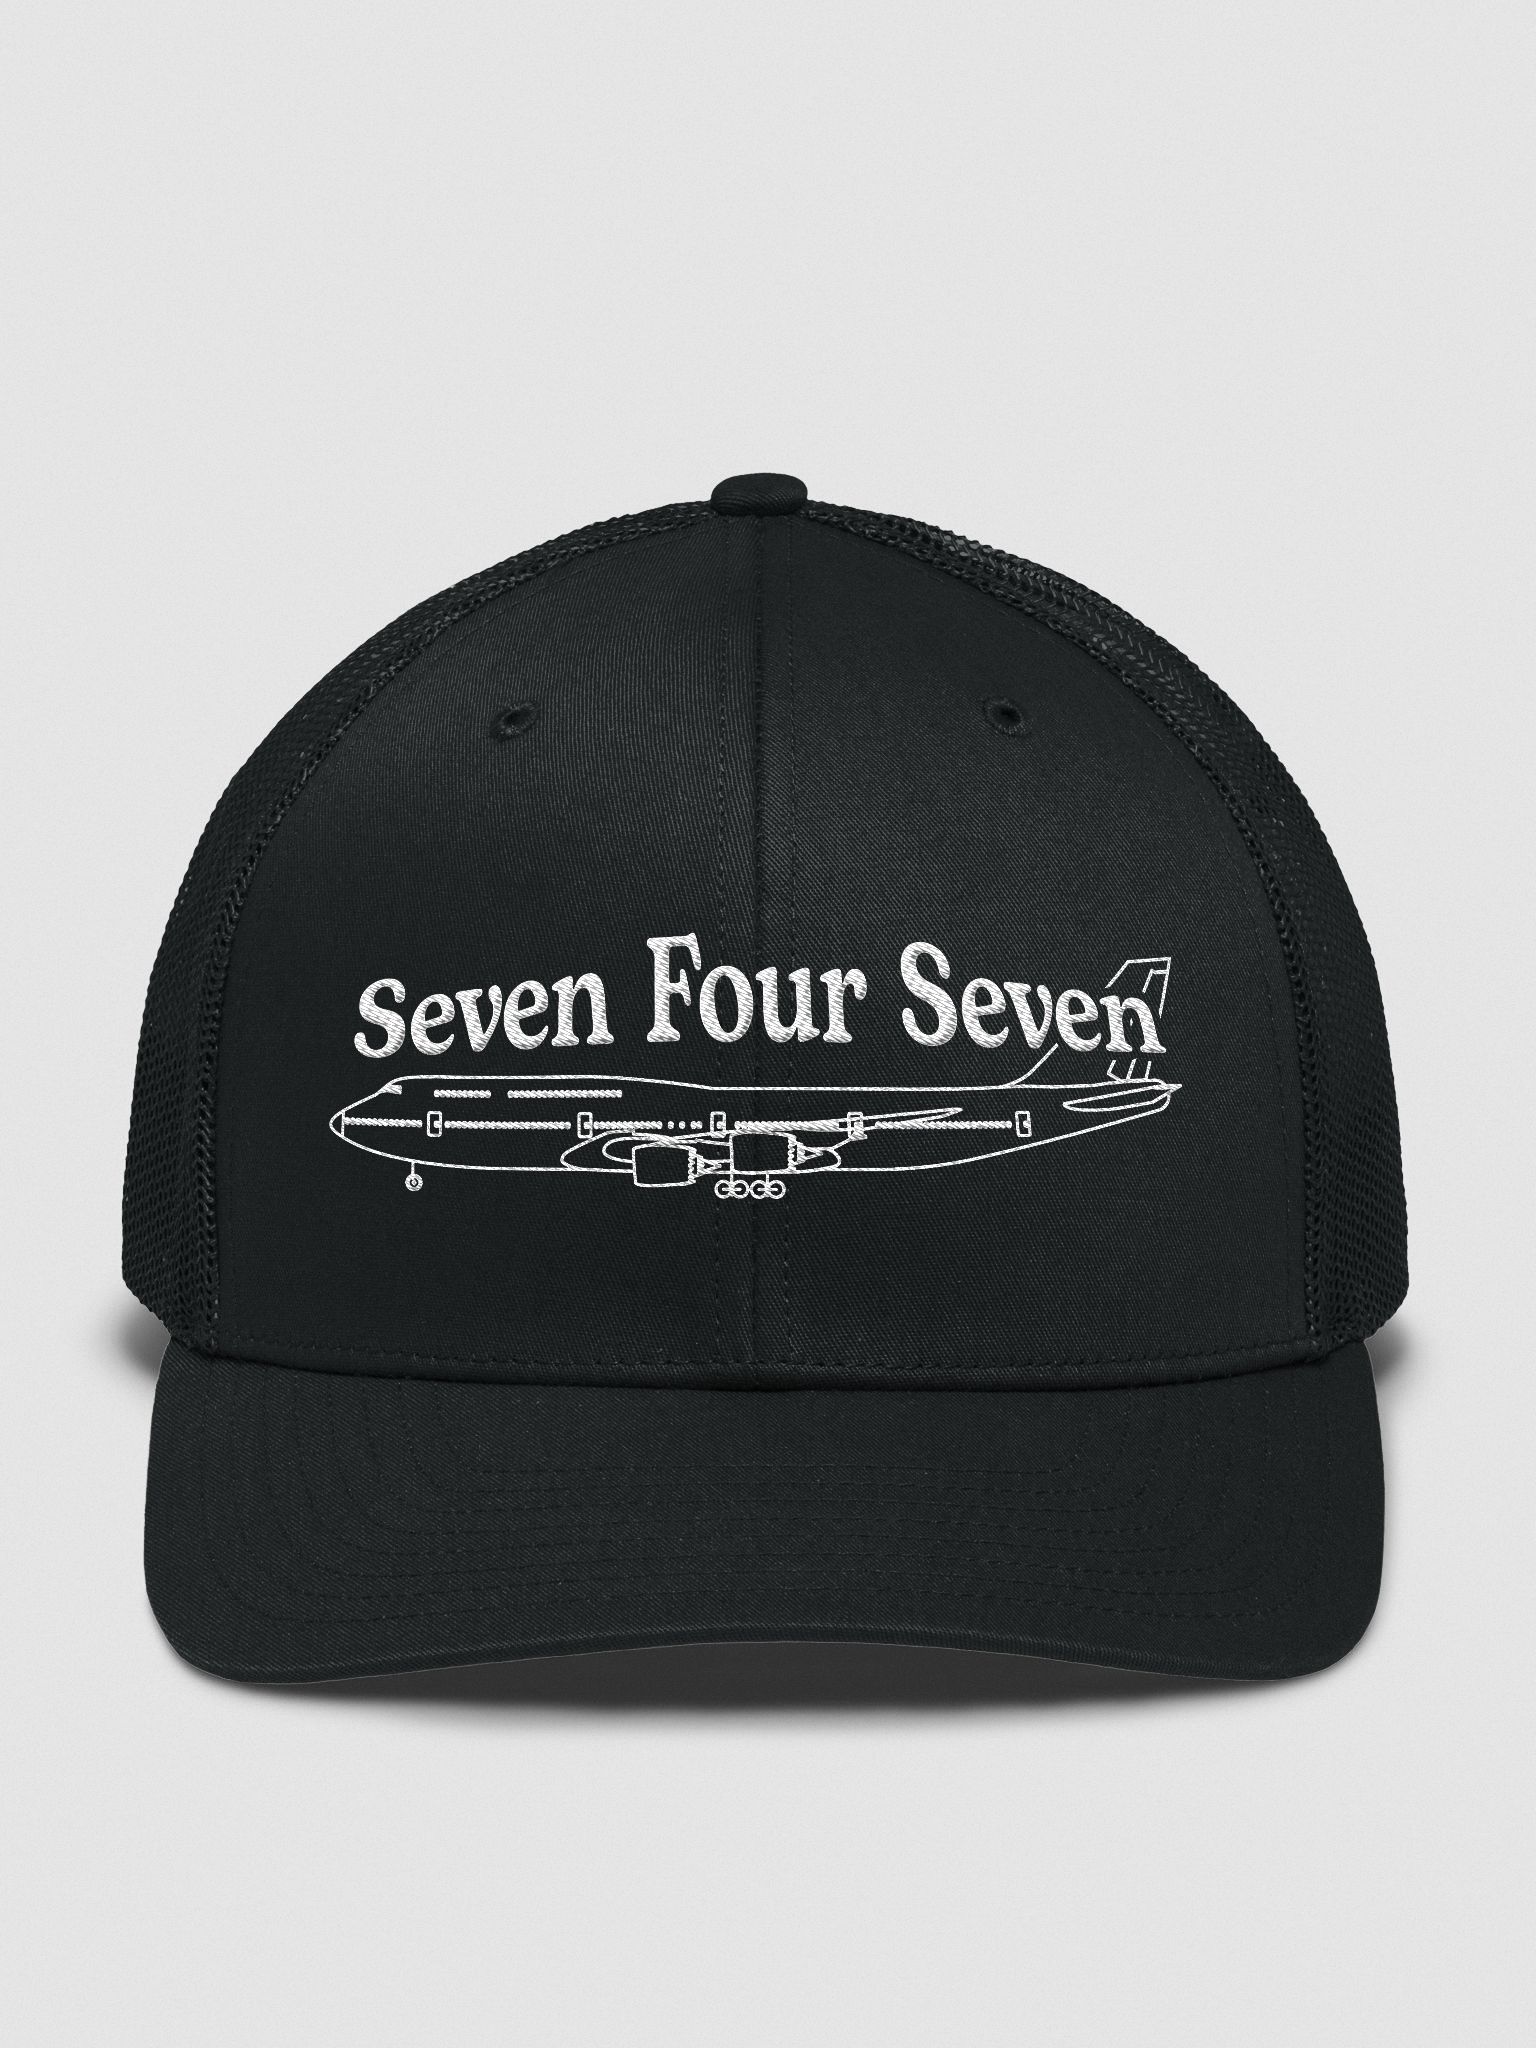 Seven Four Seven Trucker Hat | The Aviation Central